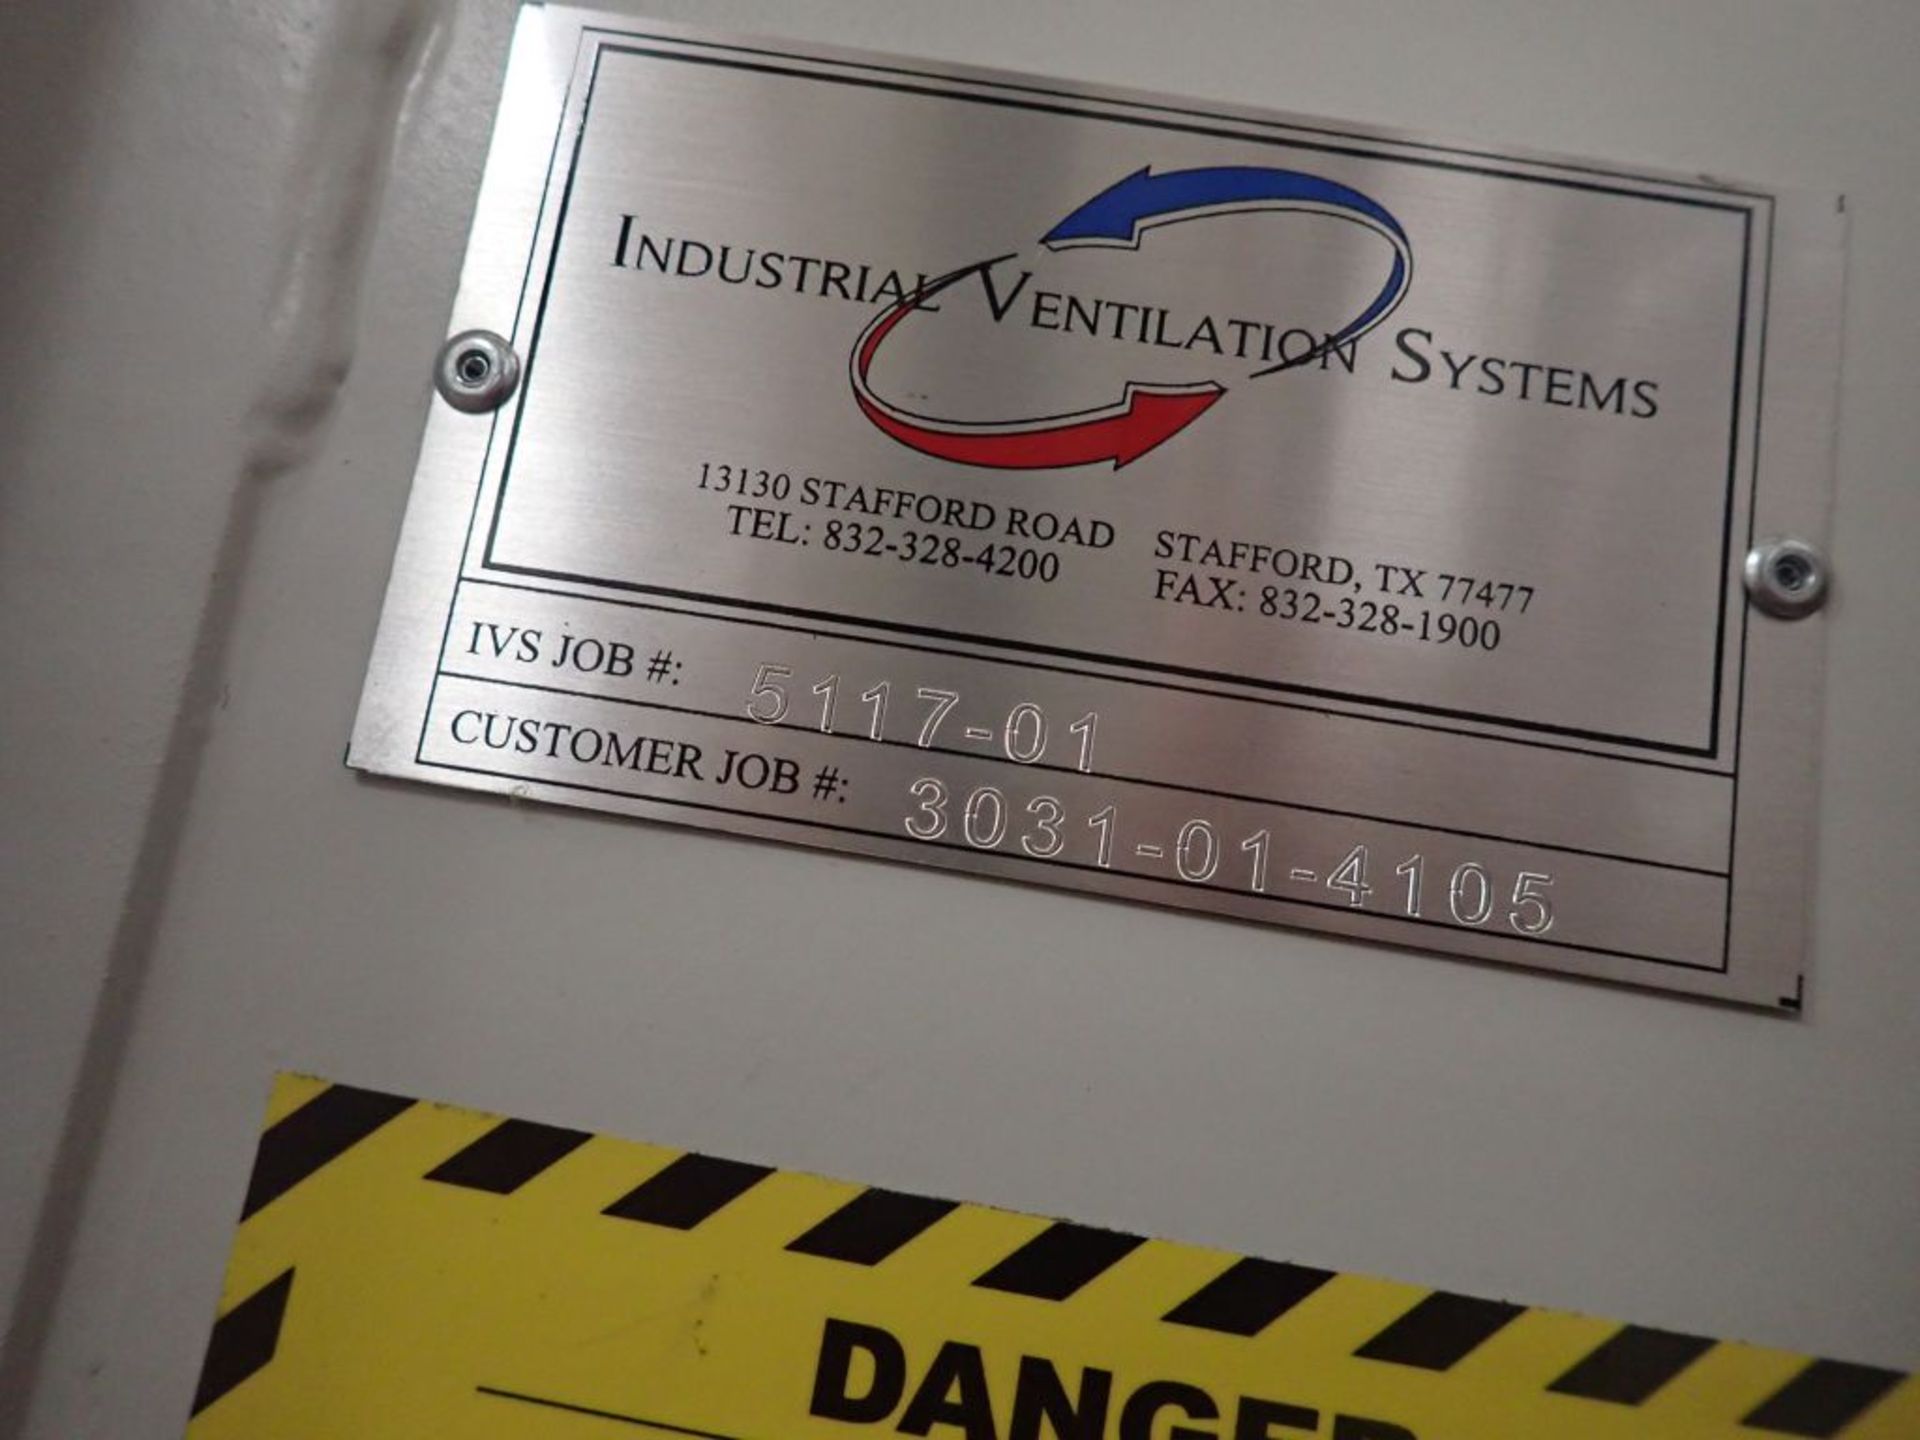 Industrial Ventilation Systems Ventilation Fan - IVS Job No. 5117-01; Customer Job No. 3031-01-4104 - Image 4 of 5